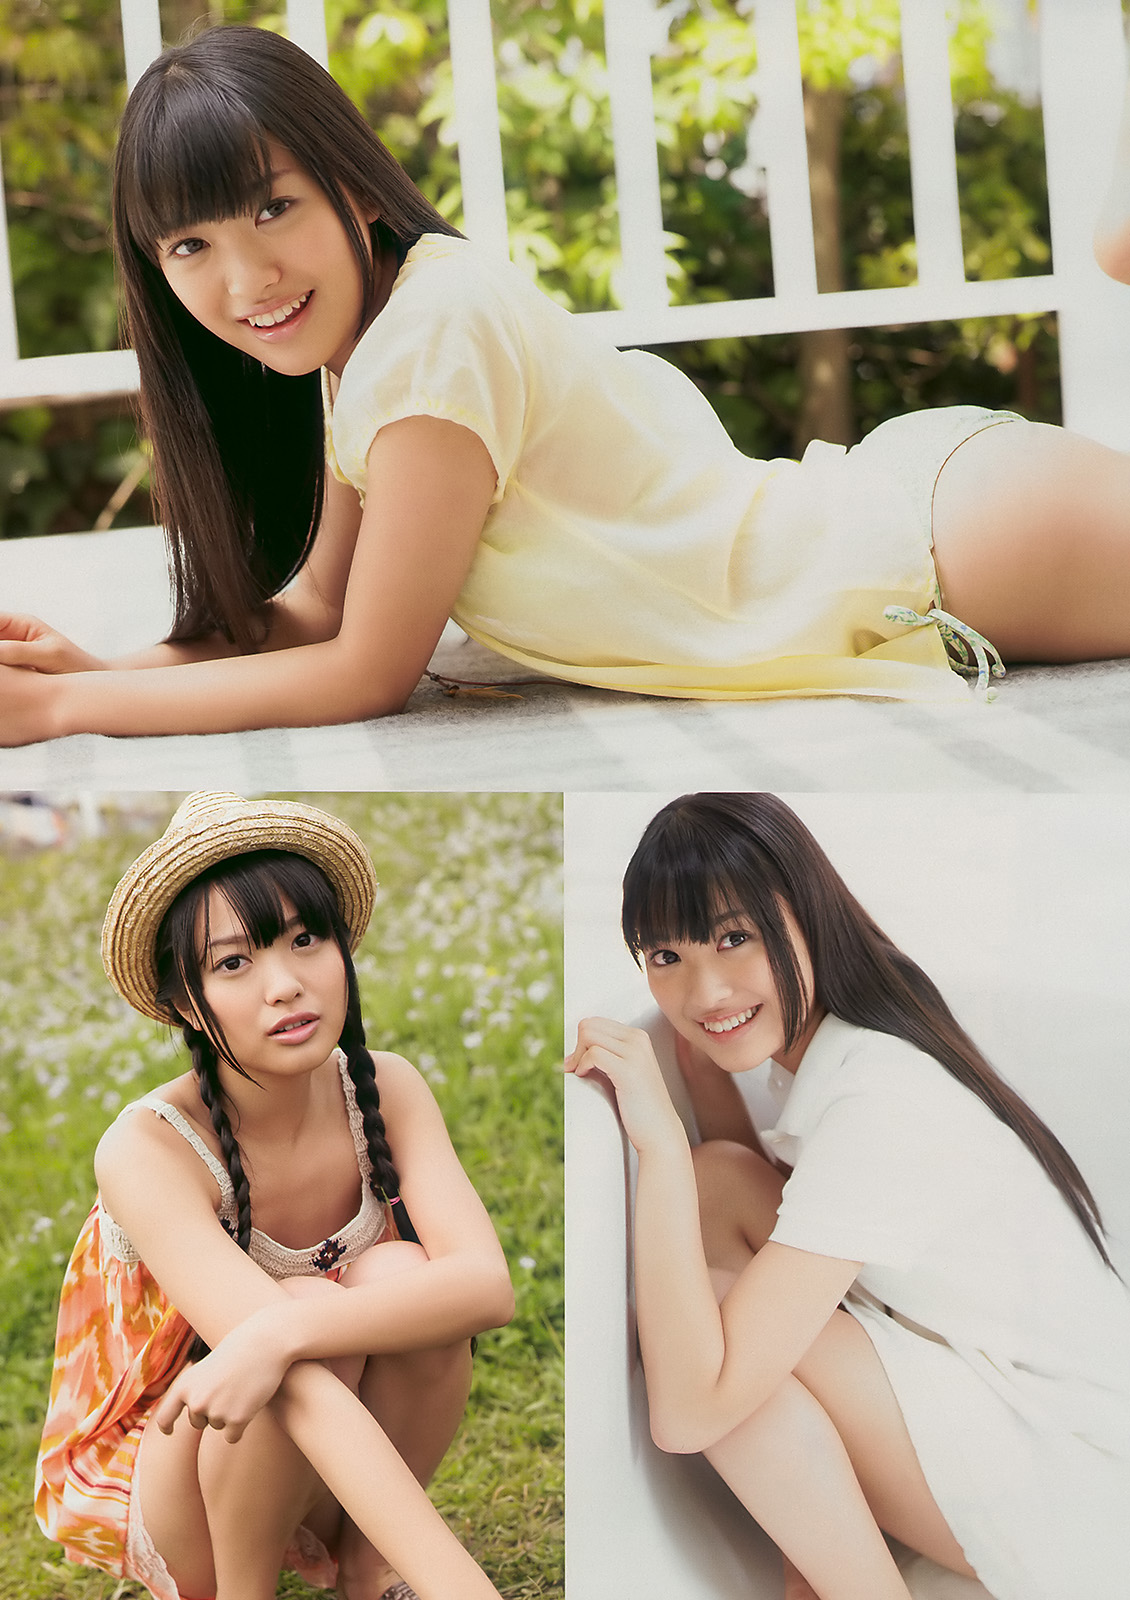 Kira Kira Anni: AKB48 Magazine Scans: Kitahara Rie and Watanabe Mayu